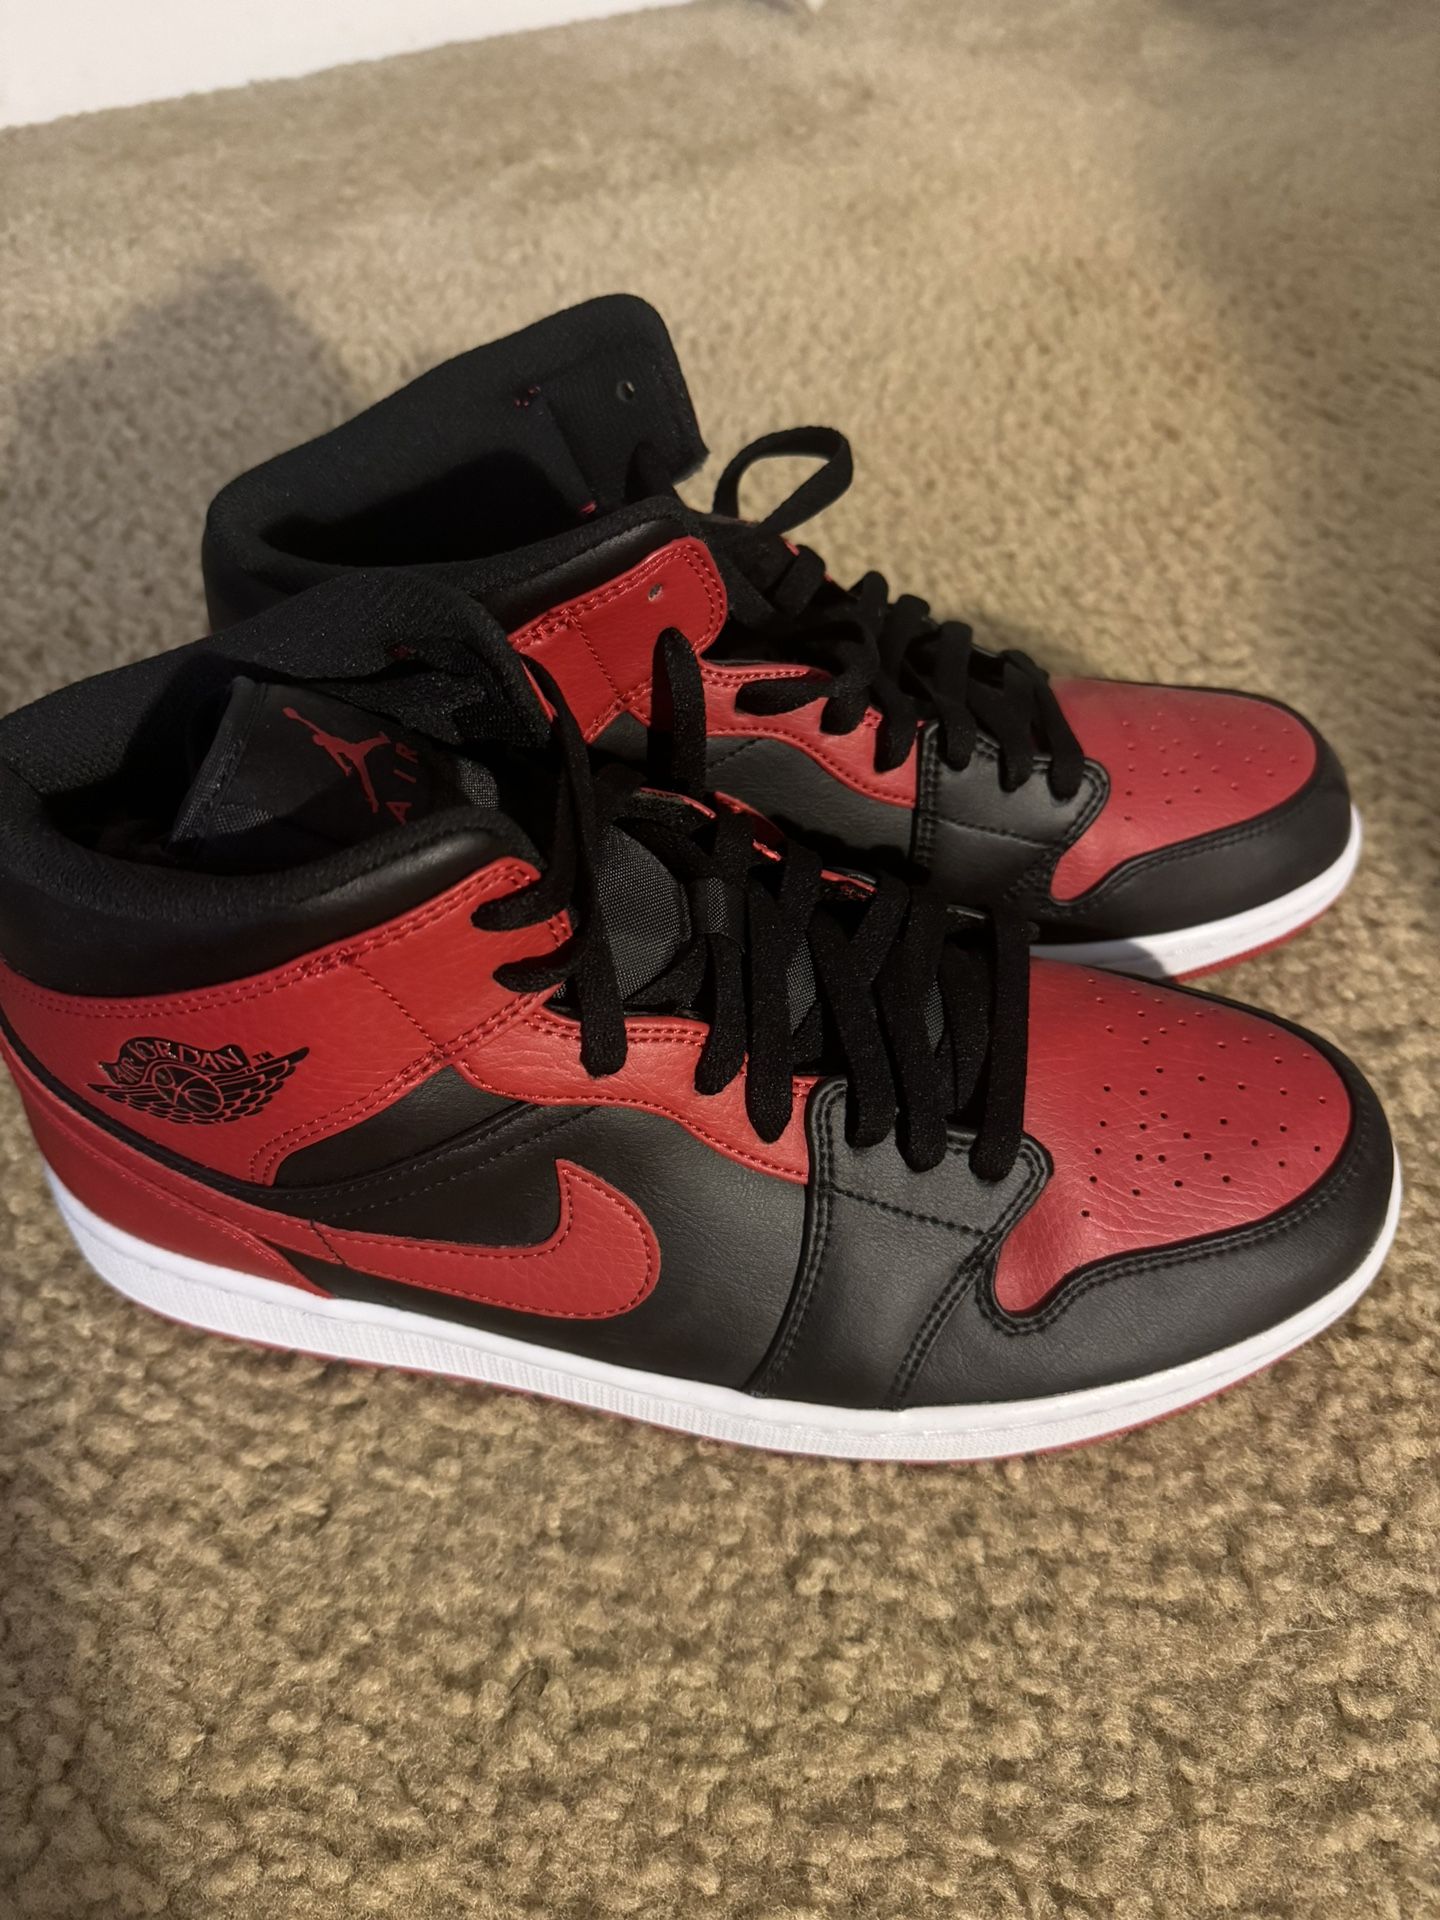 Jordan 1 Red And Black Size 12